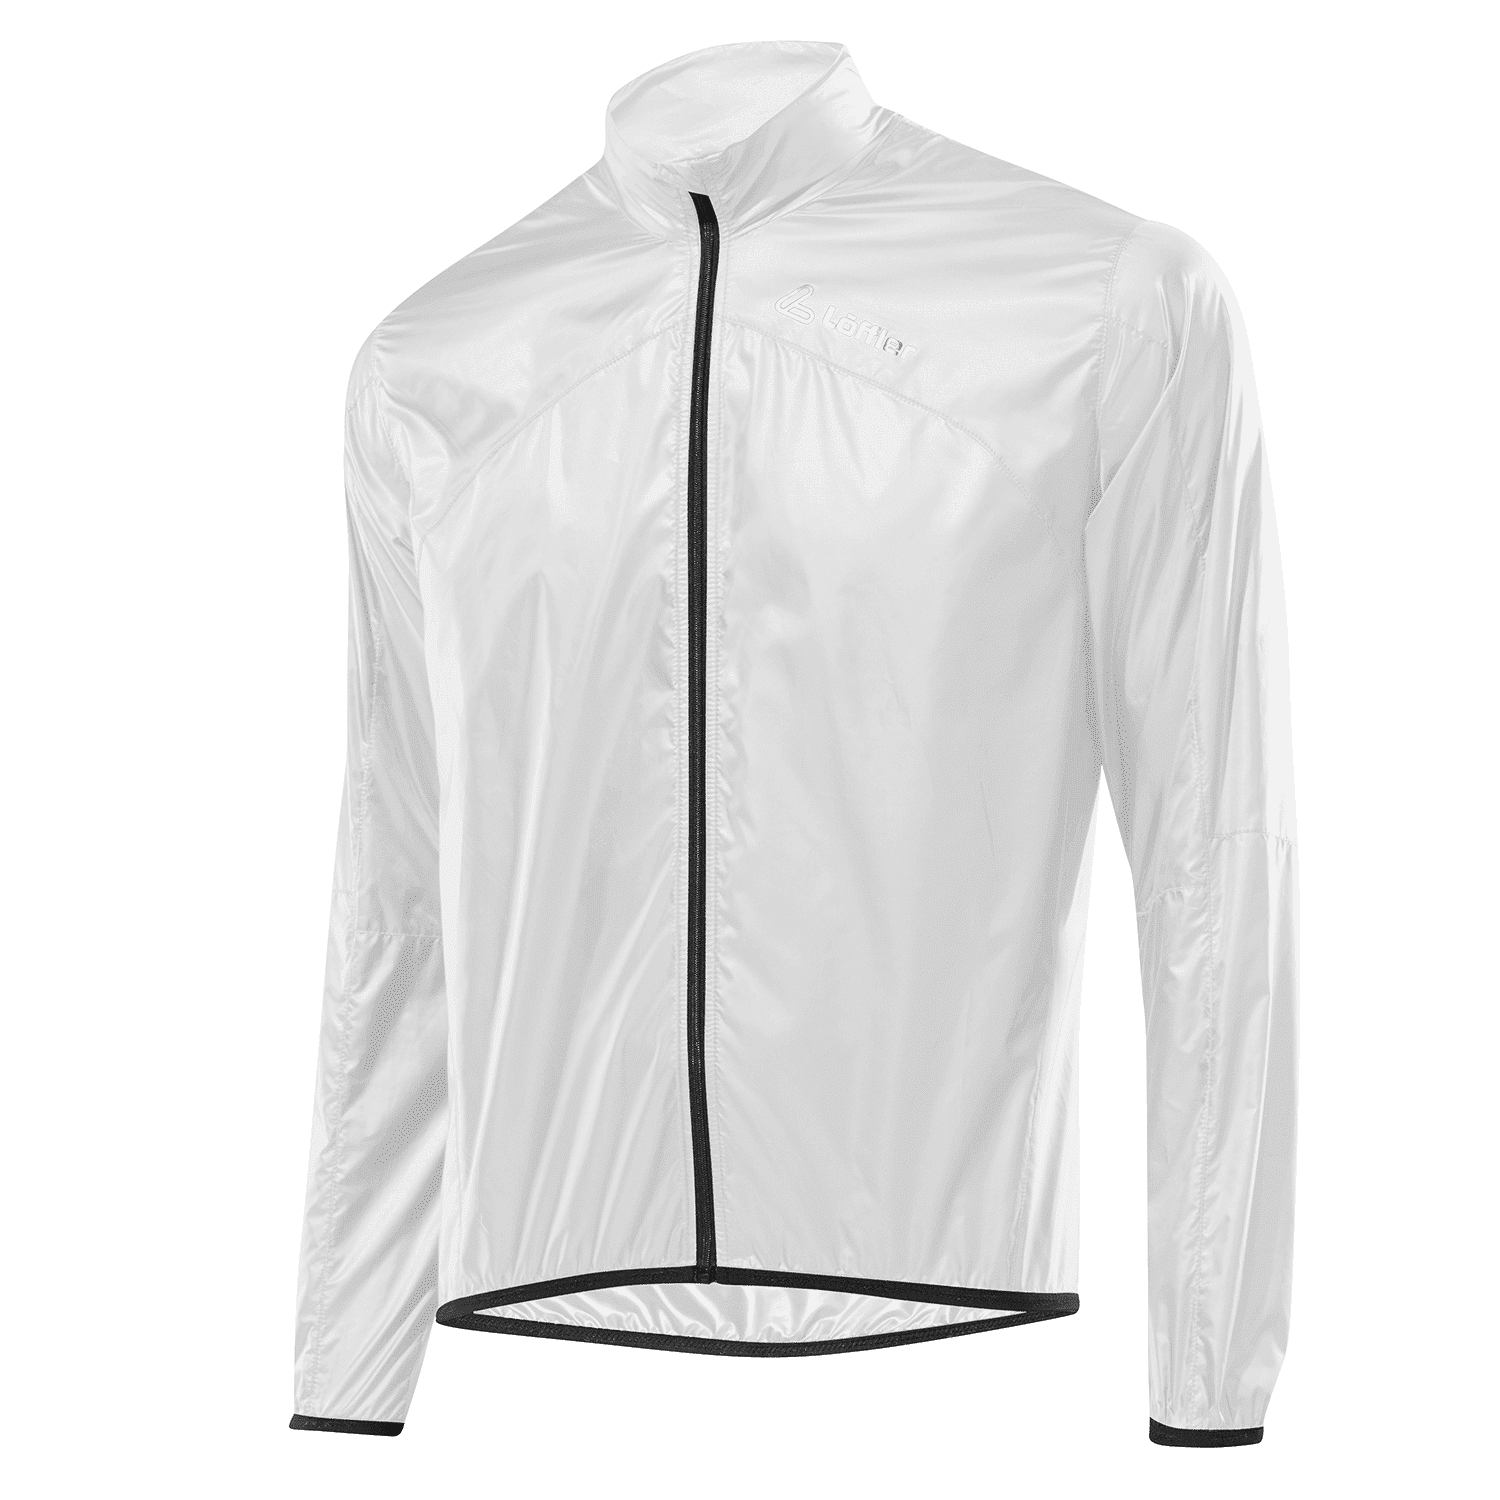 Löffler Bike Jacket Windshell - Windproof jacket - Men's